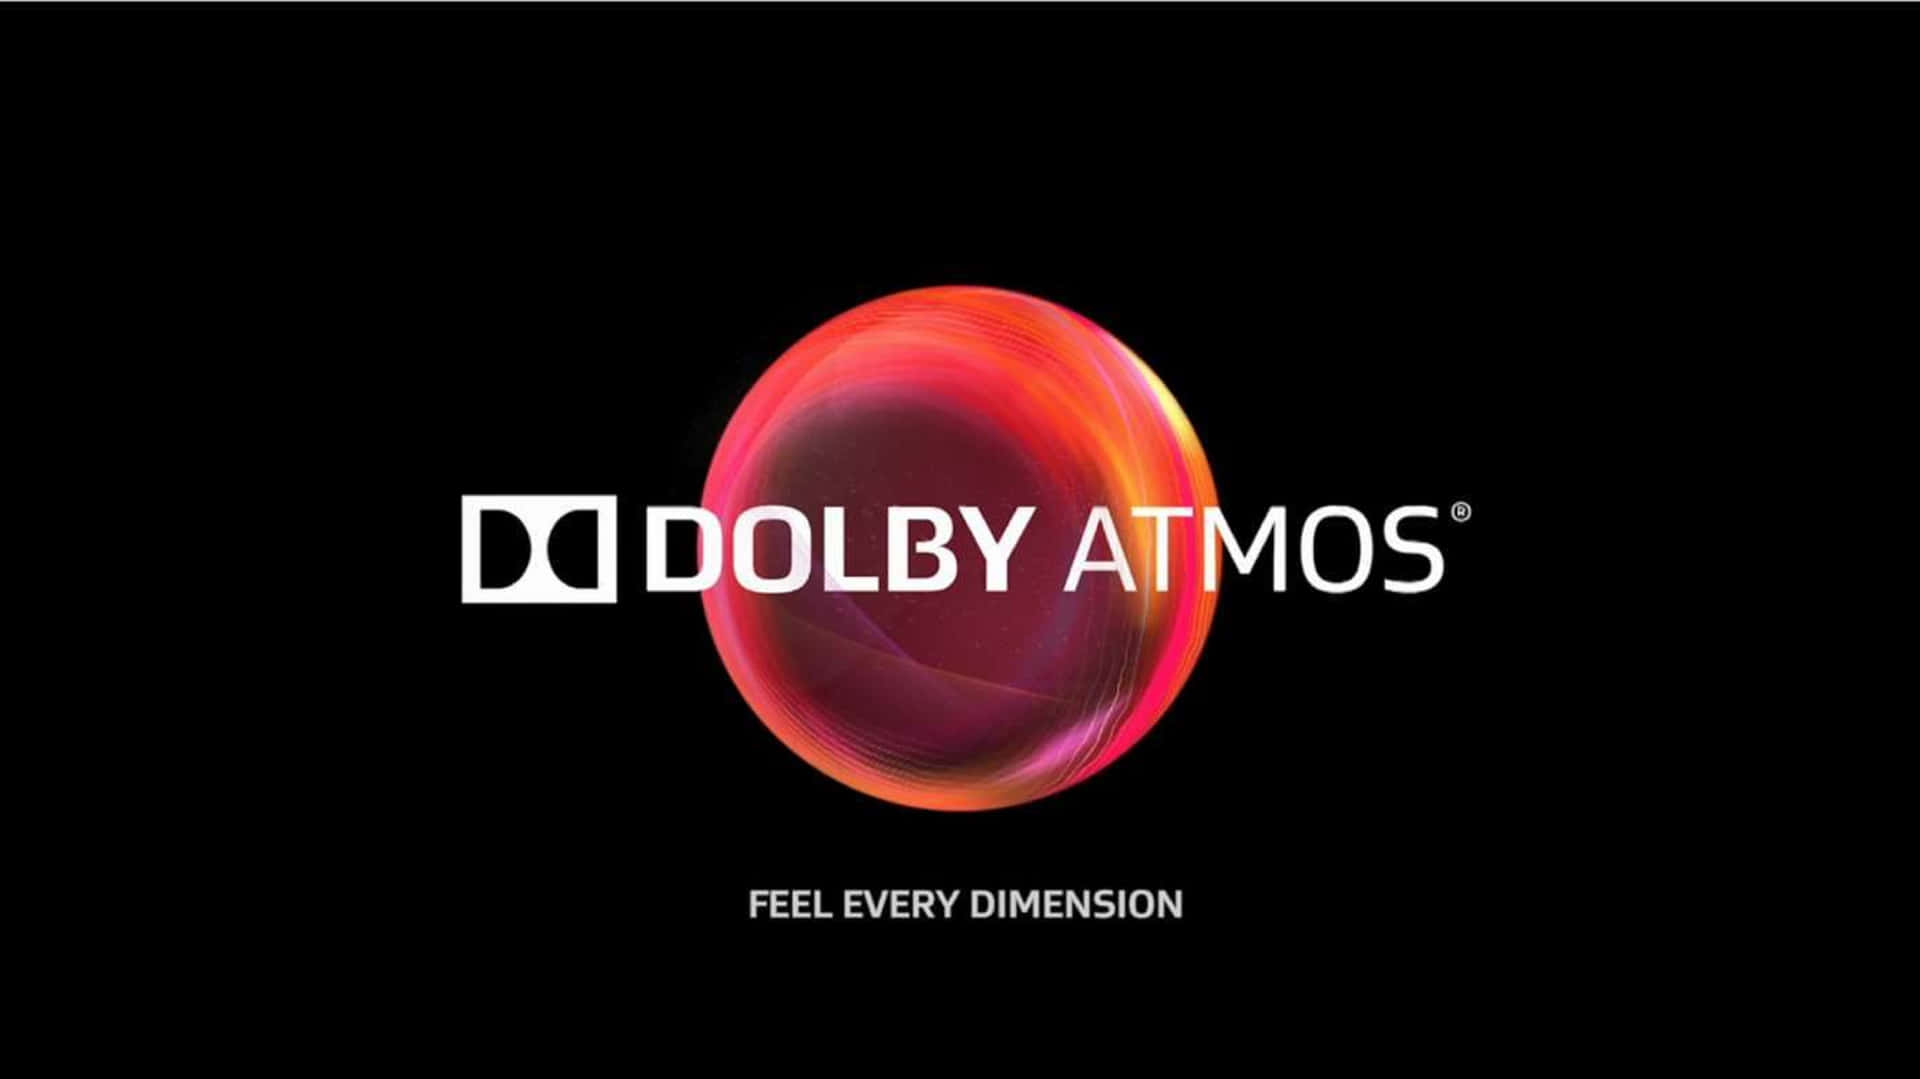 Impresionantepaisaje En 4k Dolby Vision Fondo de pantalla